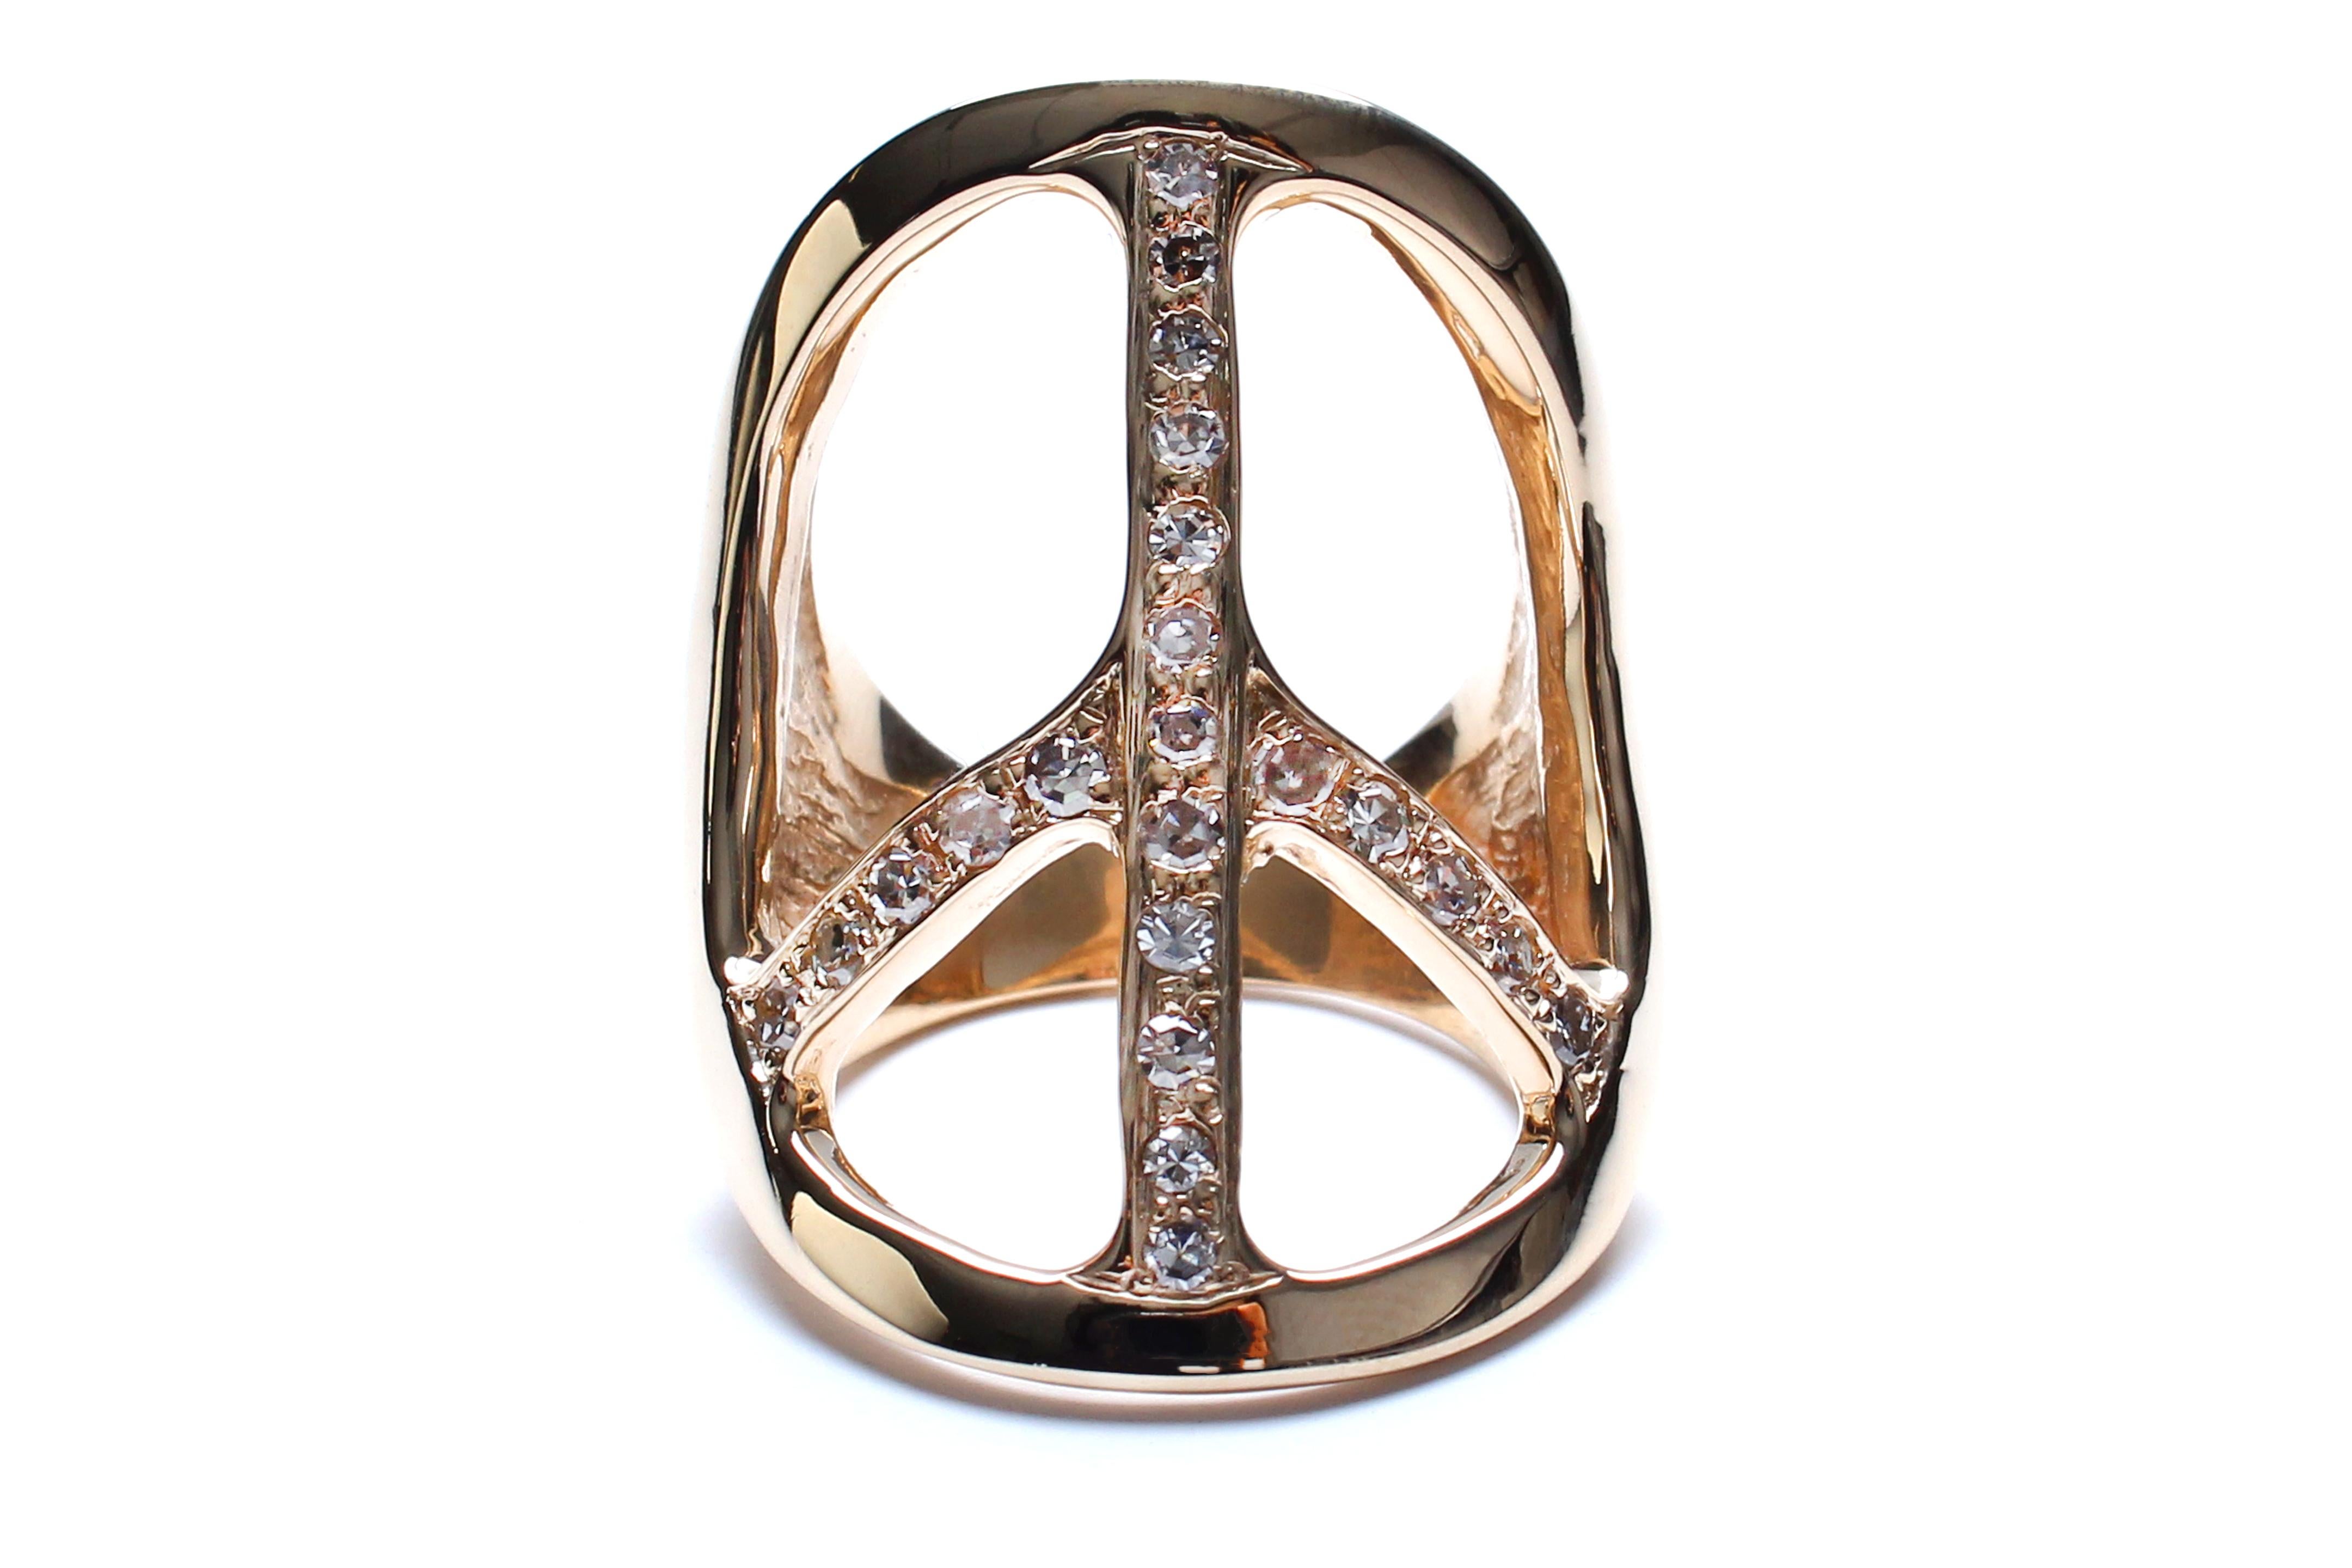 Clarissa Bronfman Signature Solid 14 Karat Gold Diamond Peace Ring For Sale 6